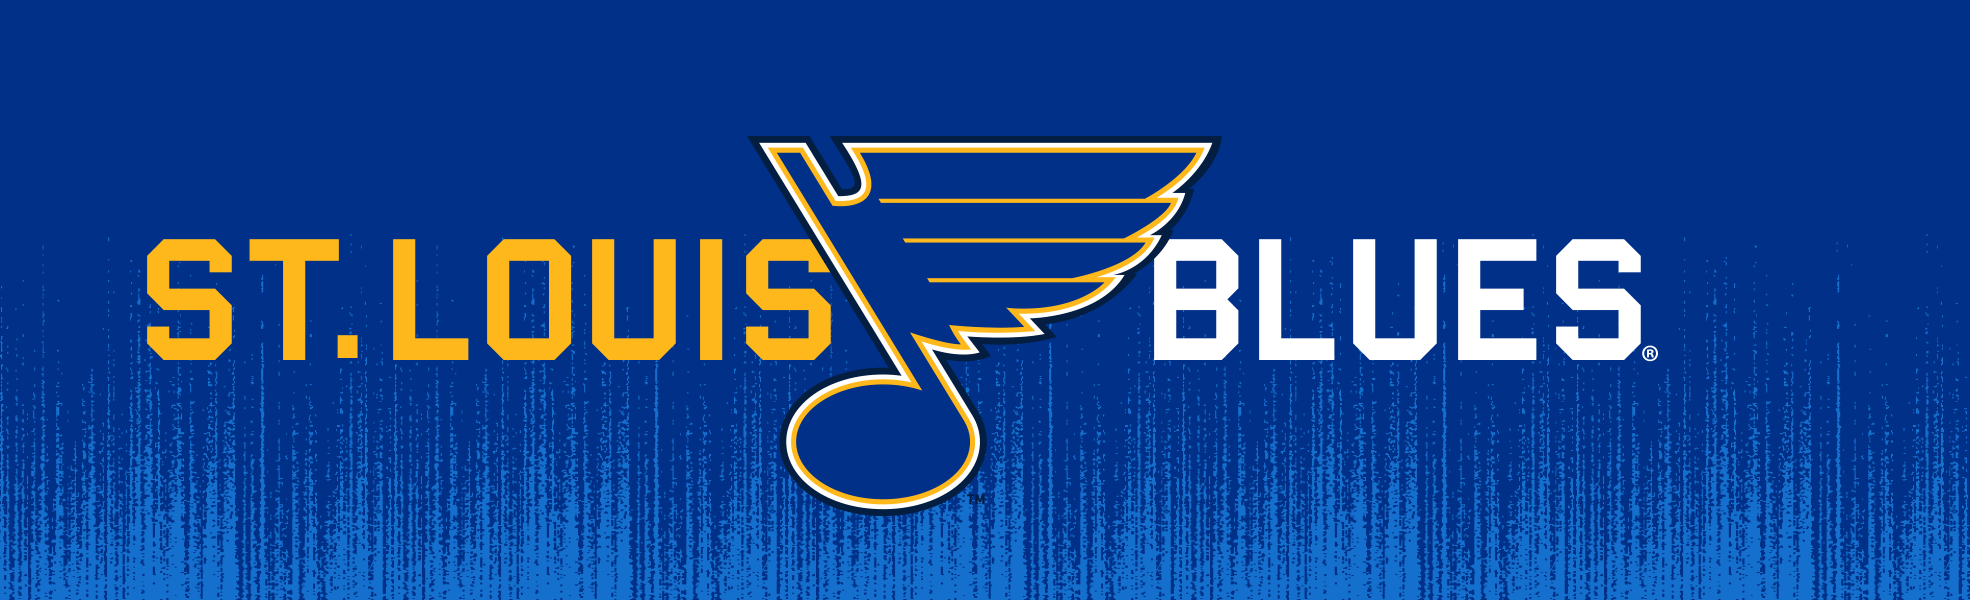 St. Louis Blues ID Holder 150 Blues Name Badge